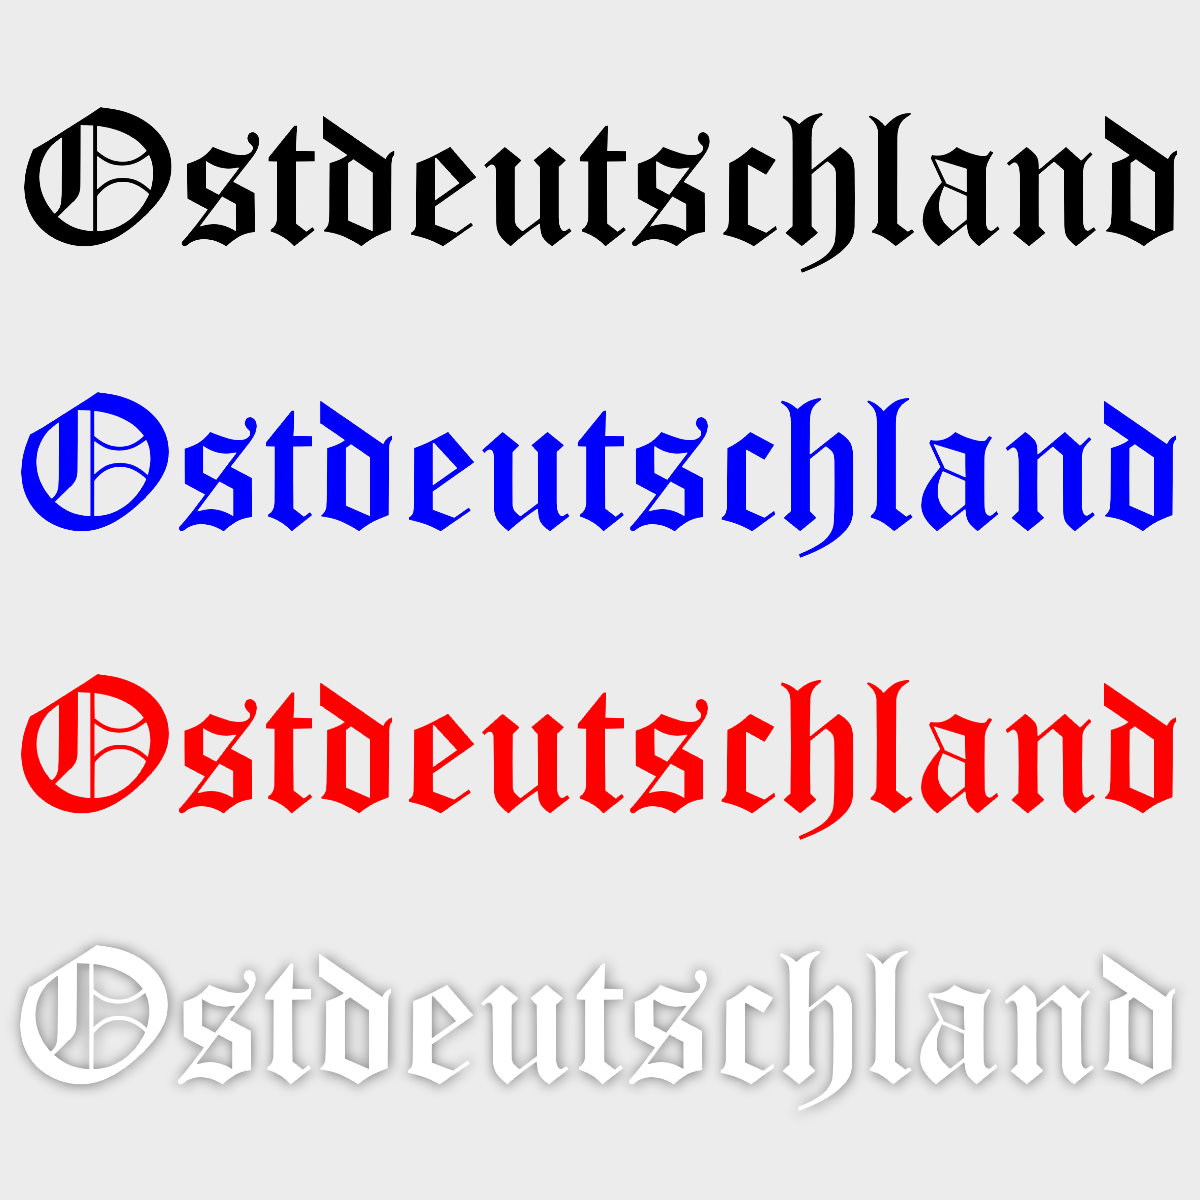 https://bordstein-streetwear.de/media/image/c1/81/e4/ostdeutschland_plotter_aufkleber_diverse_farben.jpg